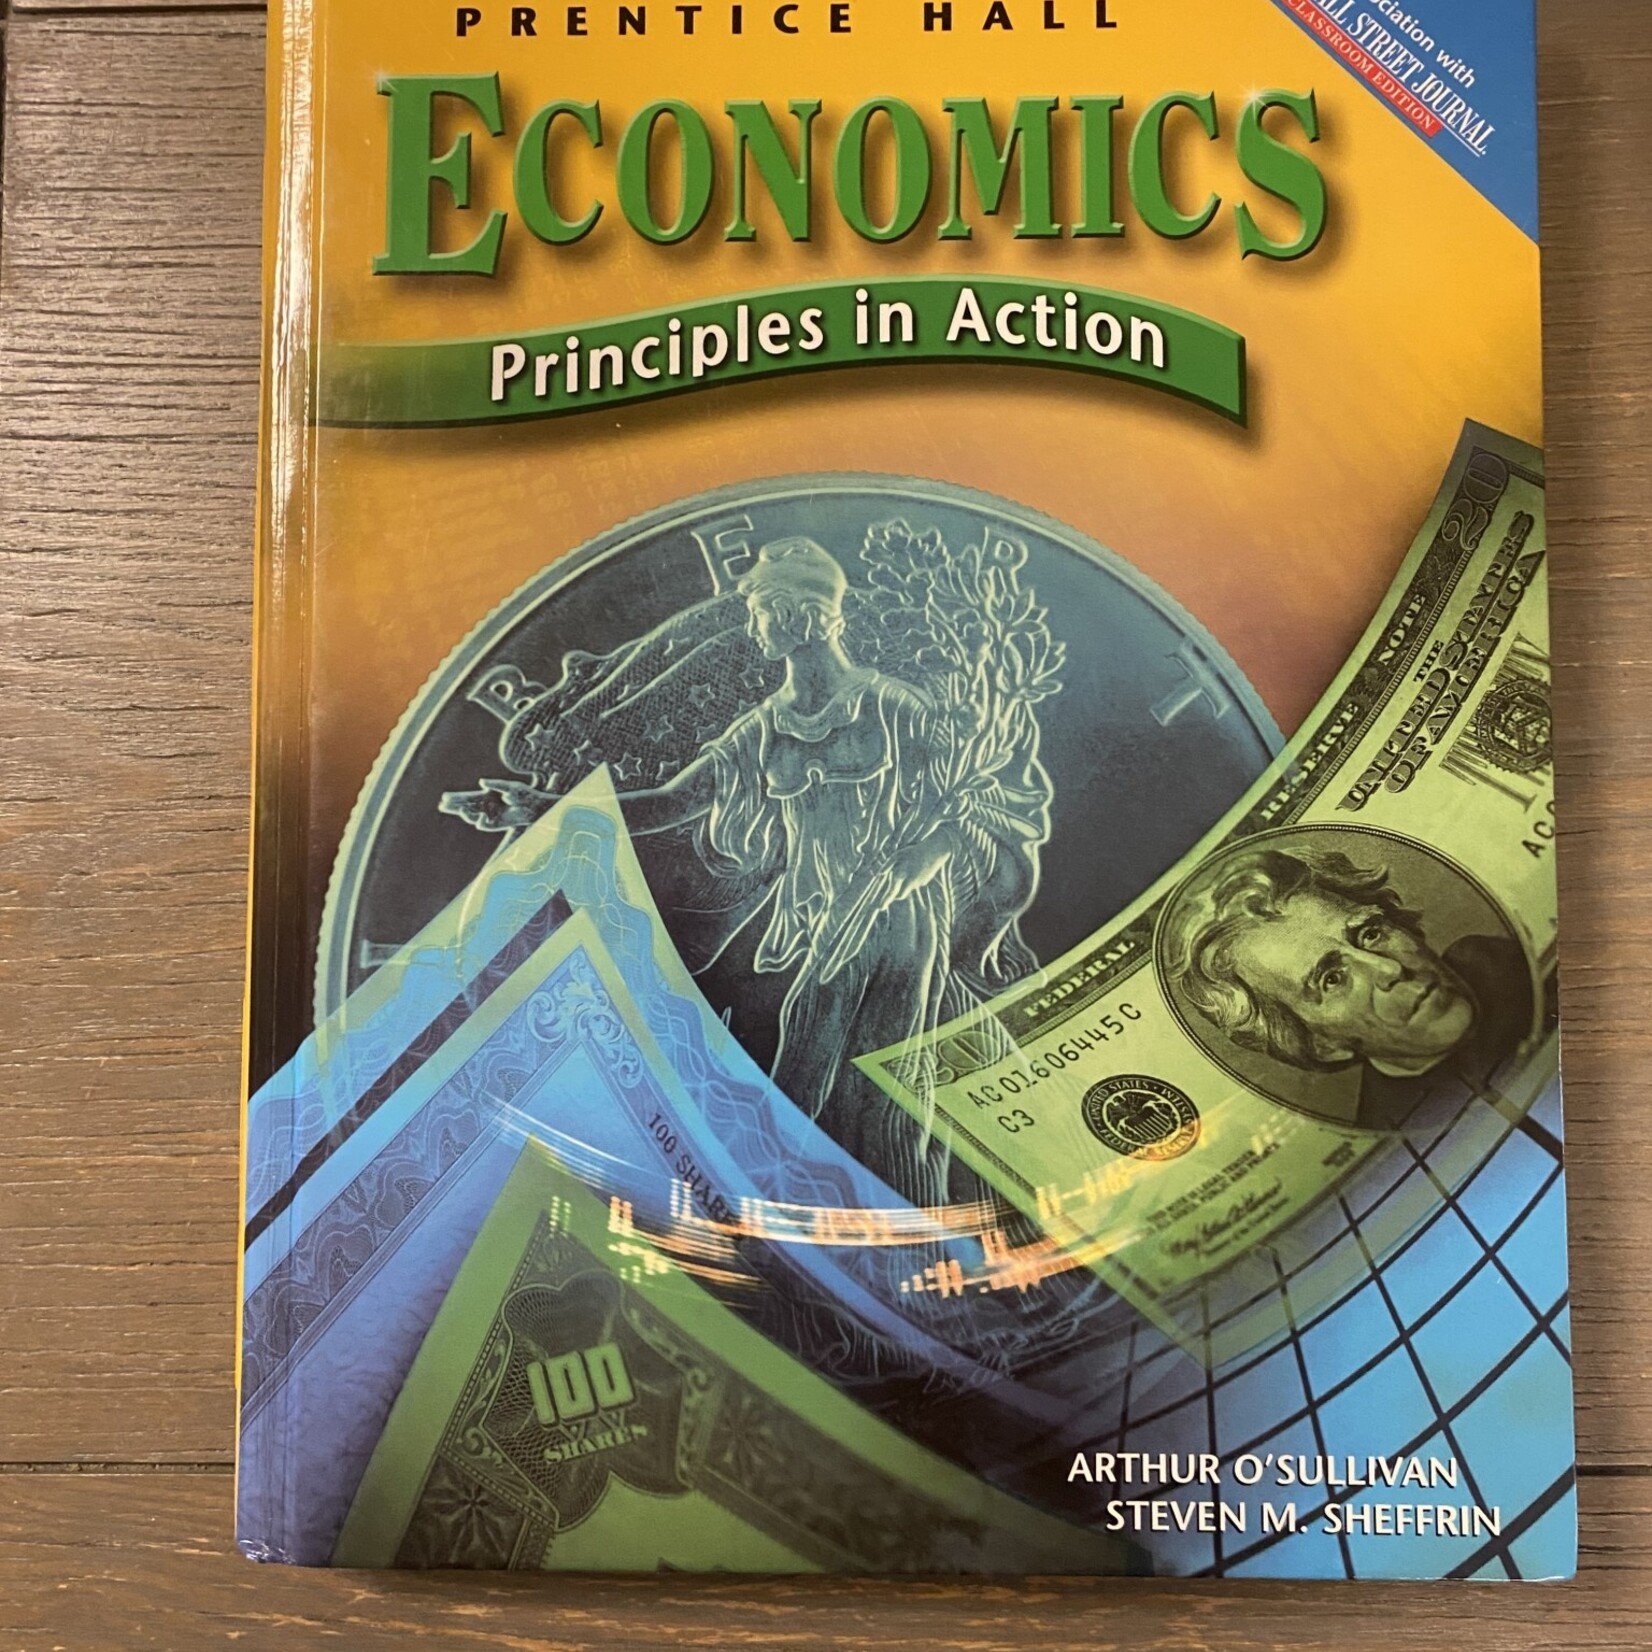 ECONOMICS PRINCIPLES IN ACTION 2007 USED